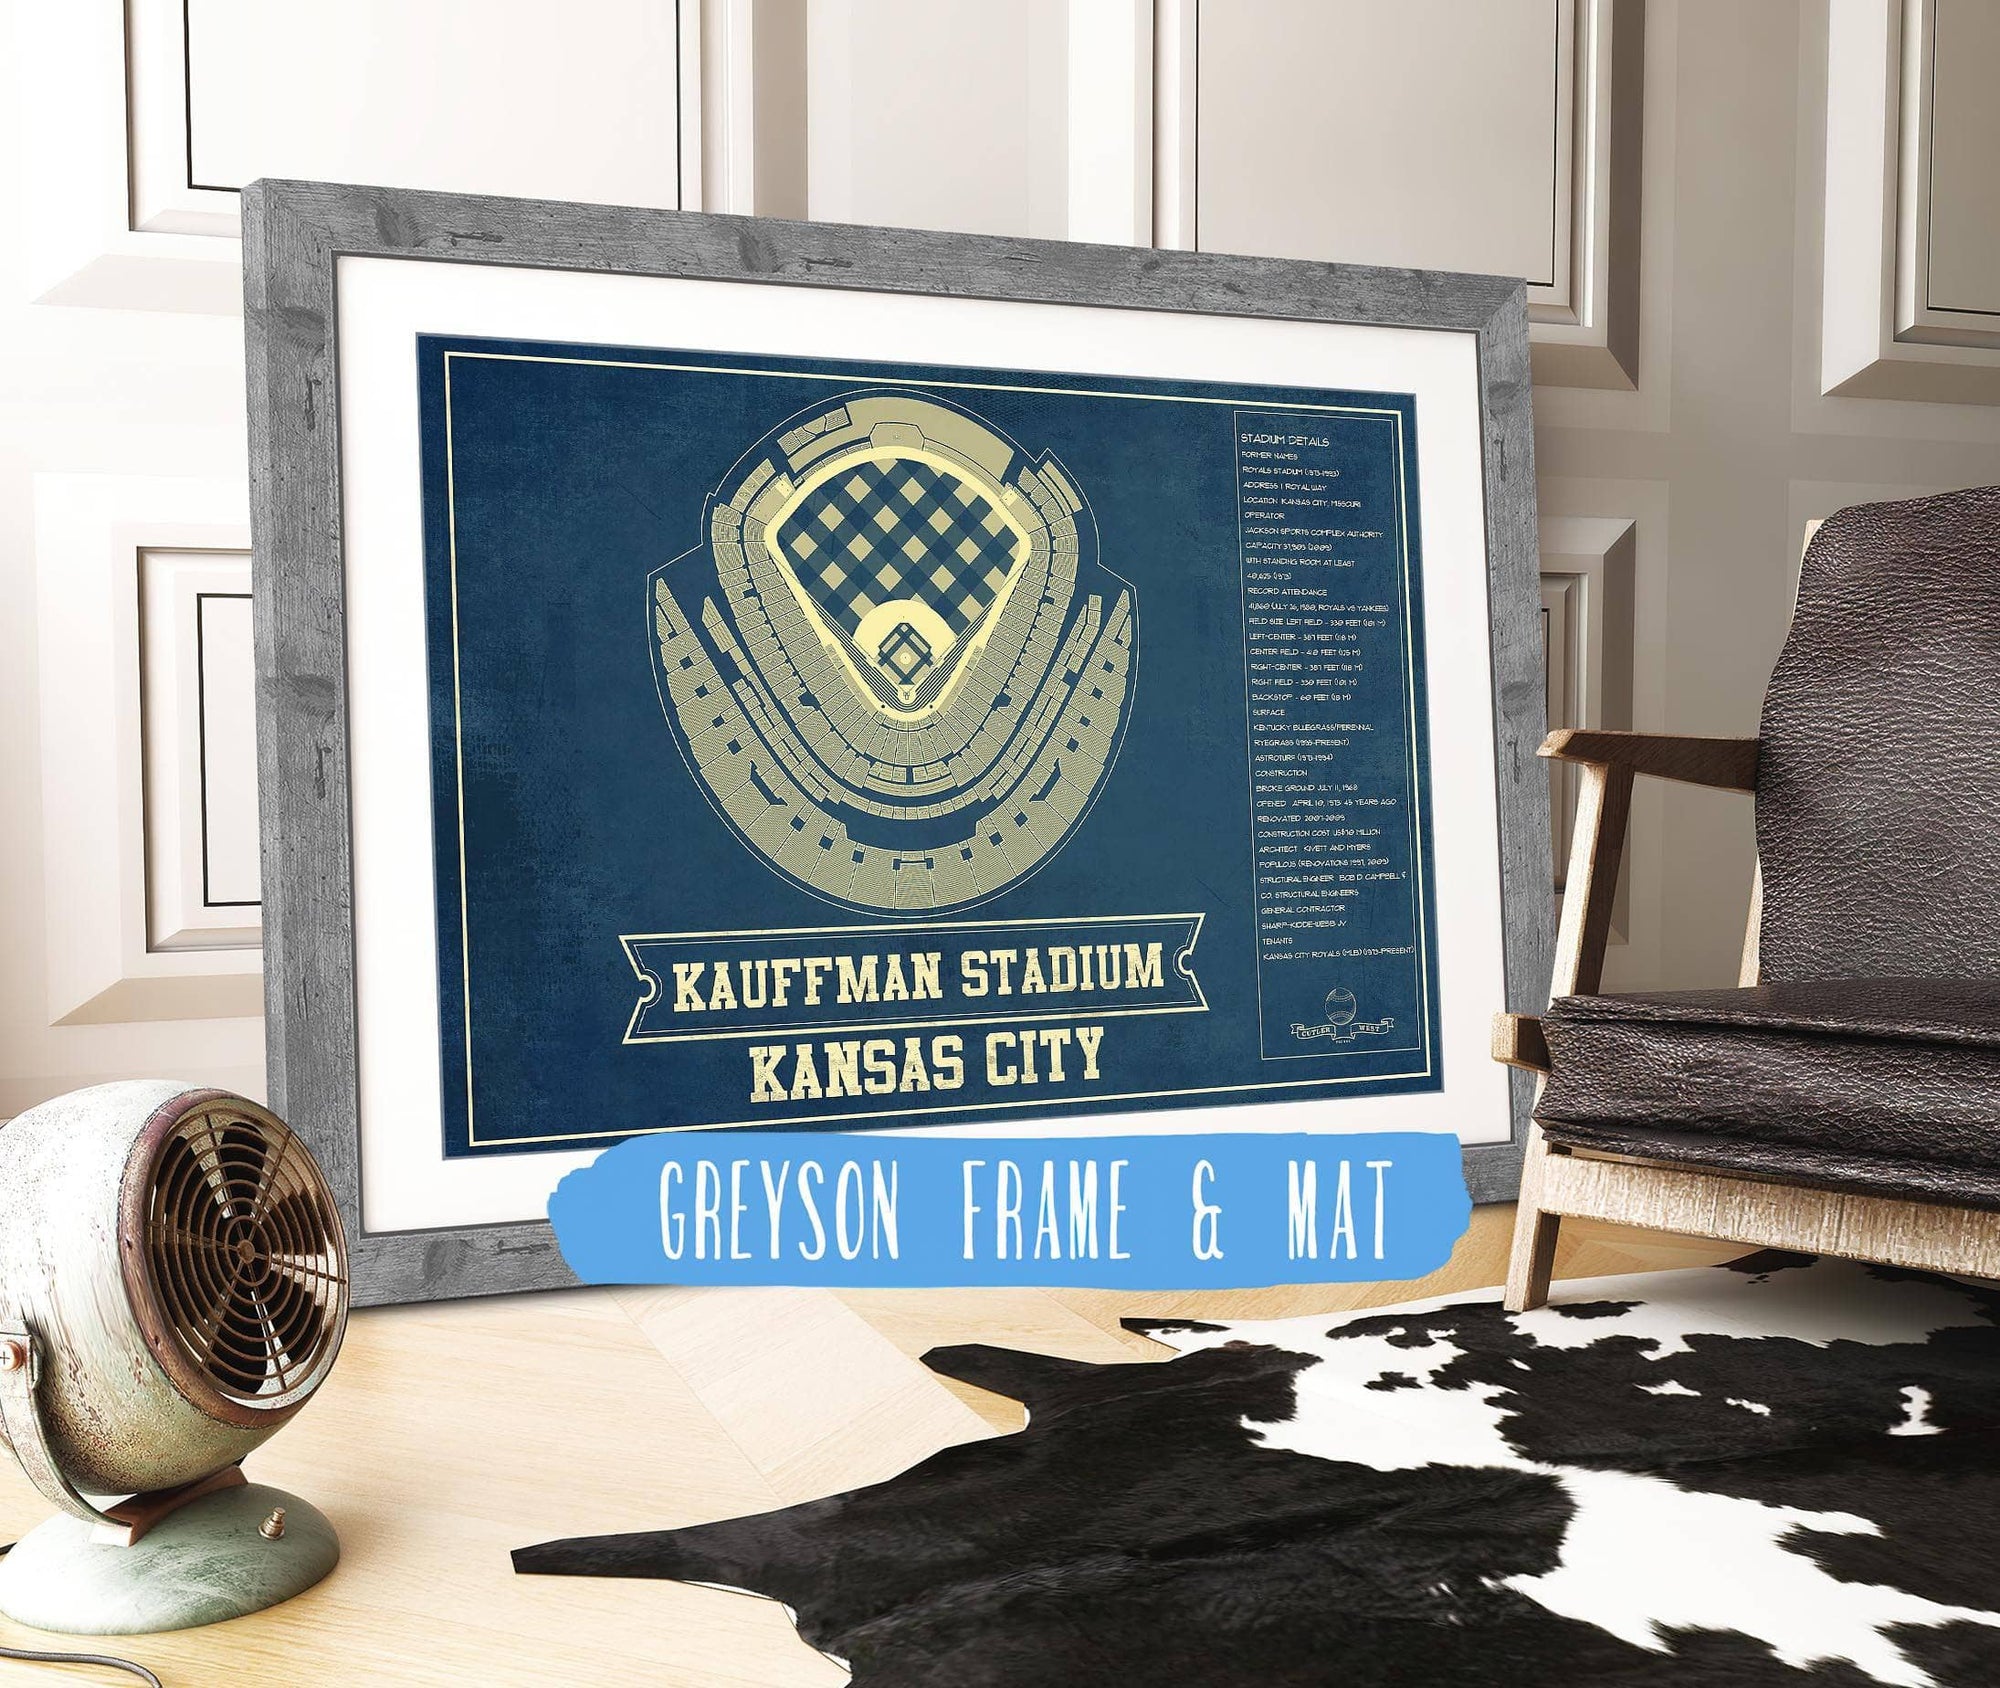 Cutler West Kansas City Royals Kauffman Stadium Seating Chart - Vintage Baseball Fan Print